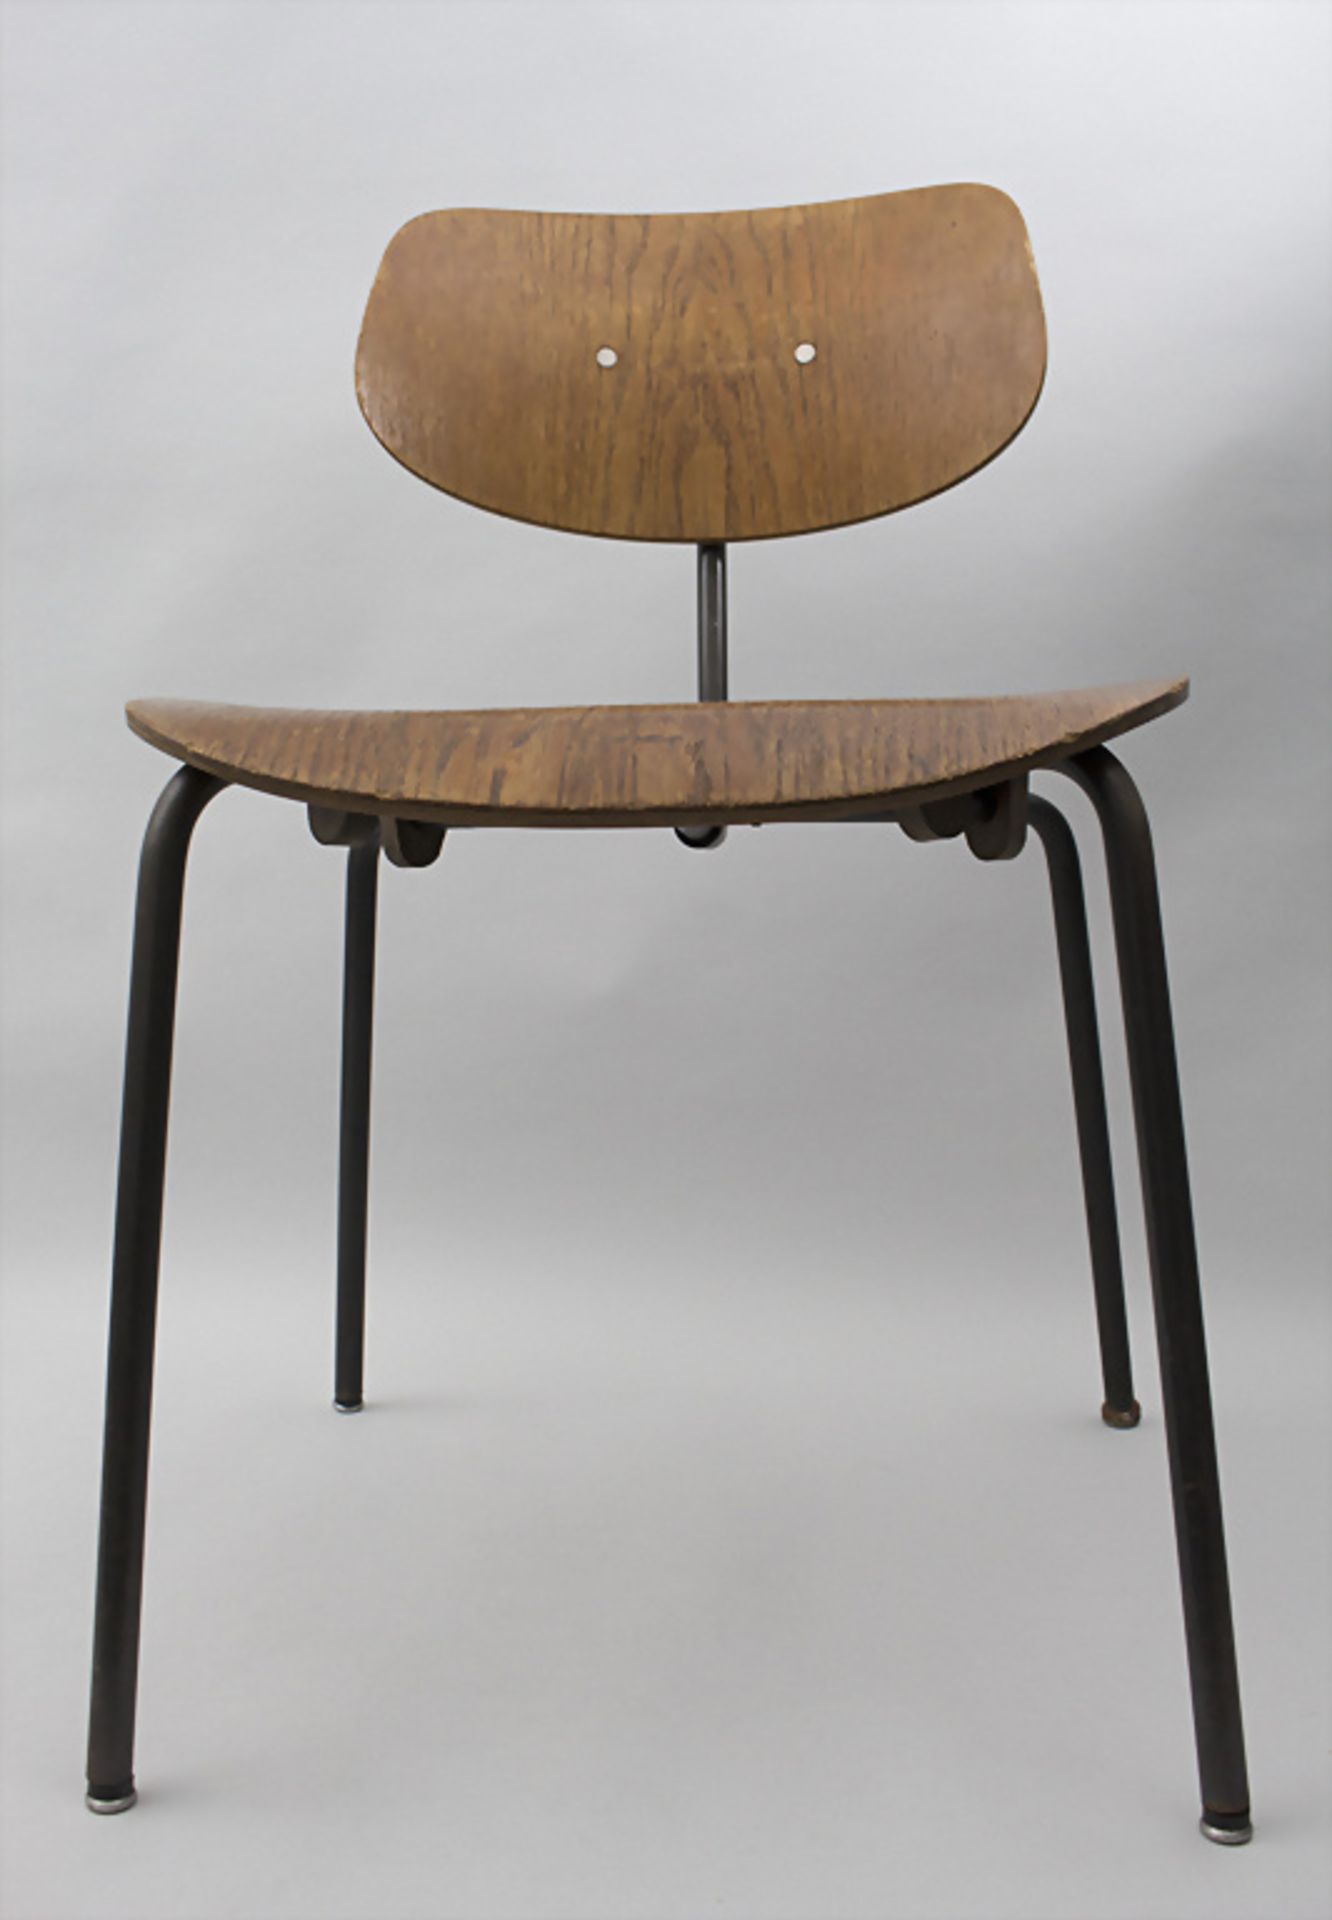 Stuhl / A chair, nach Entwurf Egon Eiermann, um 1950 - Bild 2 aus 5